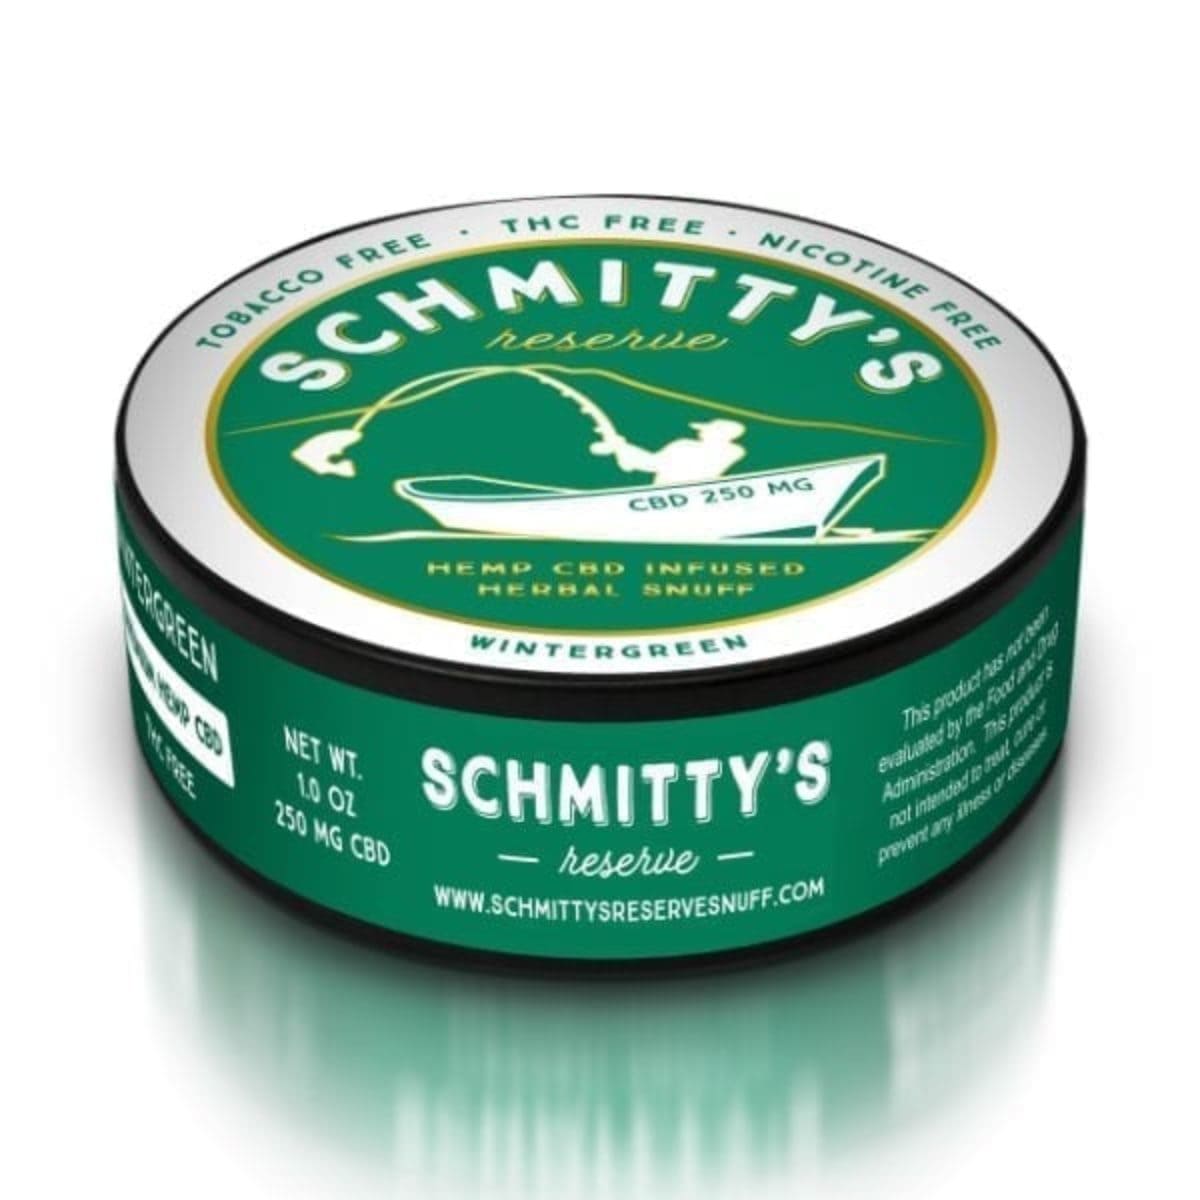 Schmitty's Snuff Snuff Reserve CBD Wintergreen Flavor image1